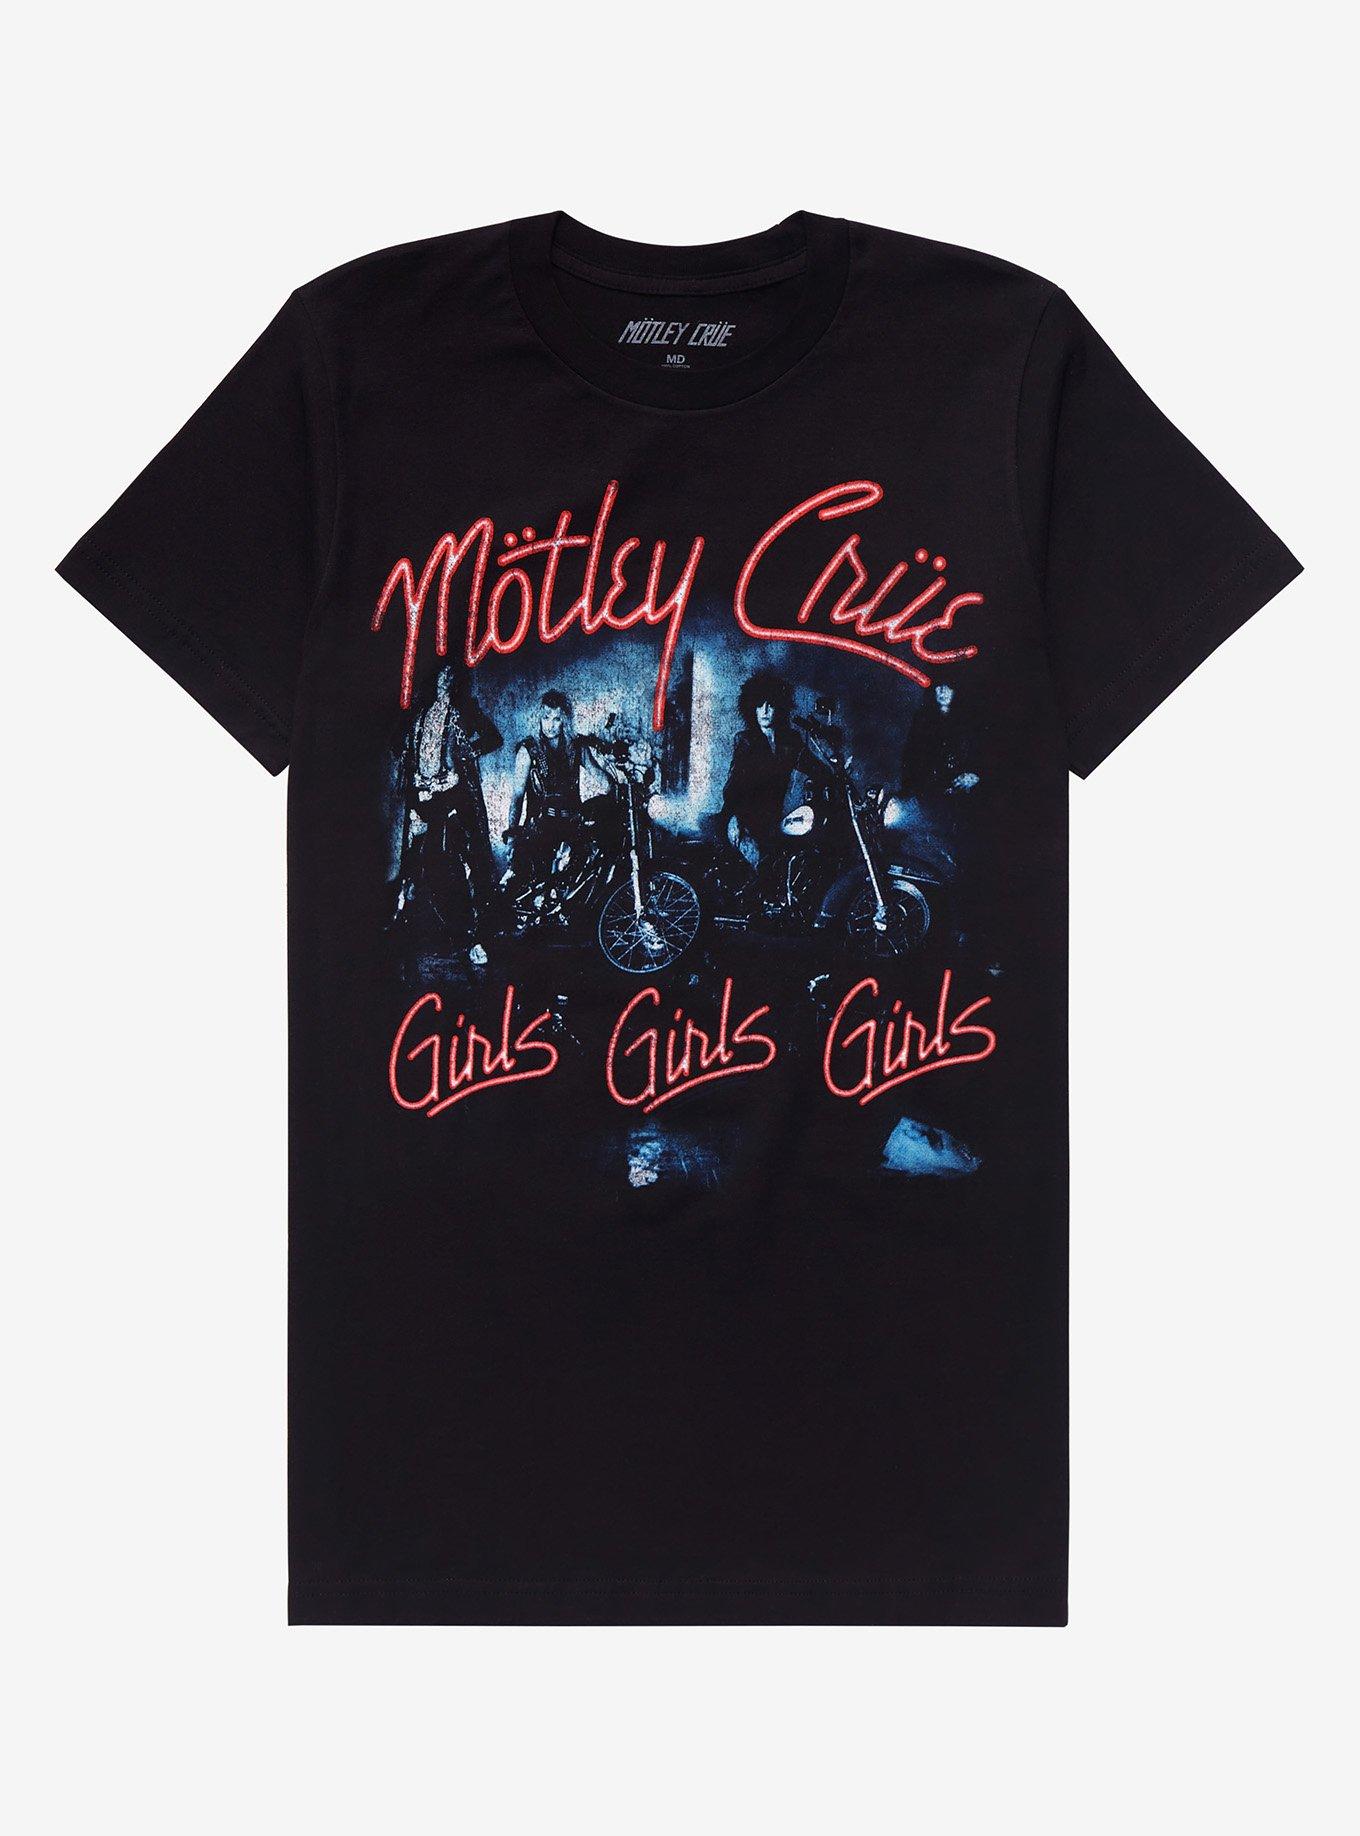 Motley Crue Girls Girls Girls Tracklisting Girls T-Shirt | Hot Topic